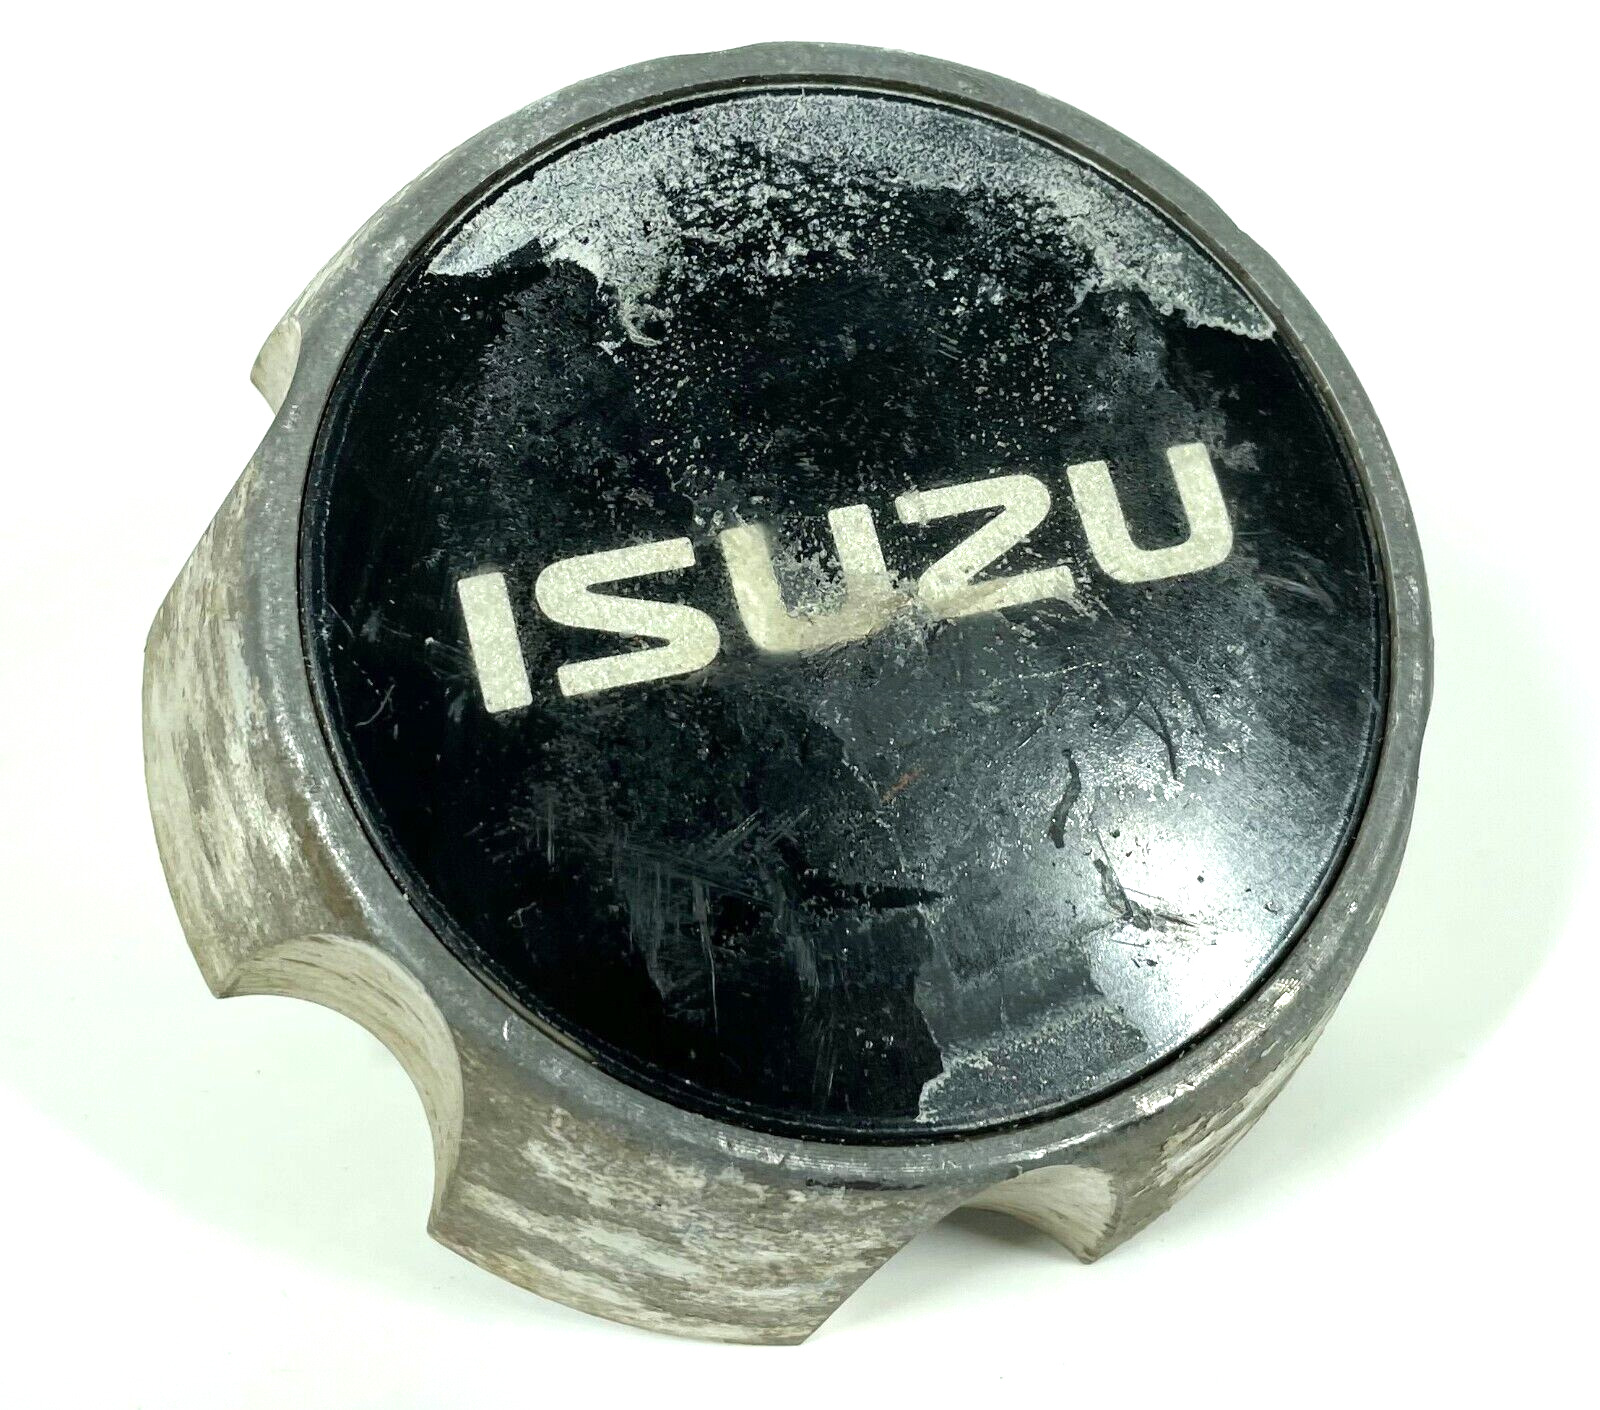 ONE 1994-1997 Isuzu Rodeo # 64201 Aluminum Wheel Chrome Center Cap USED